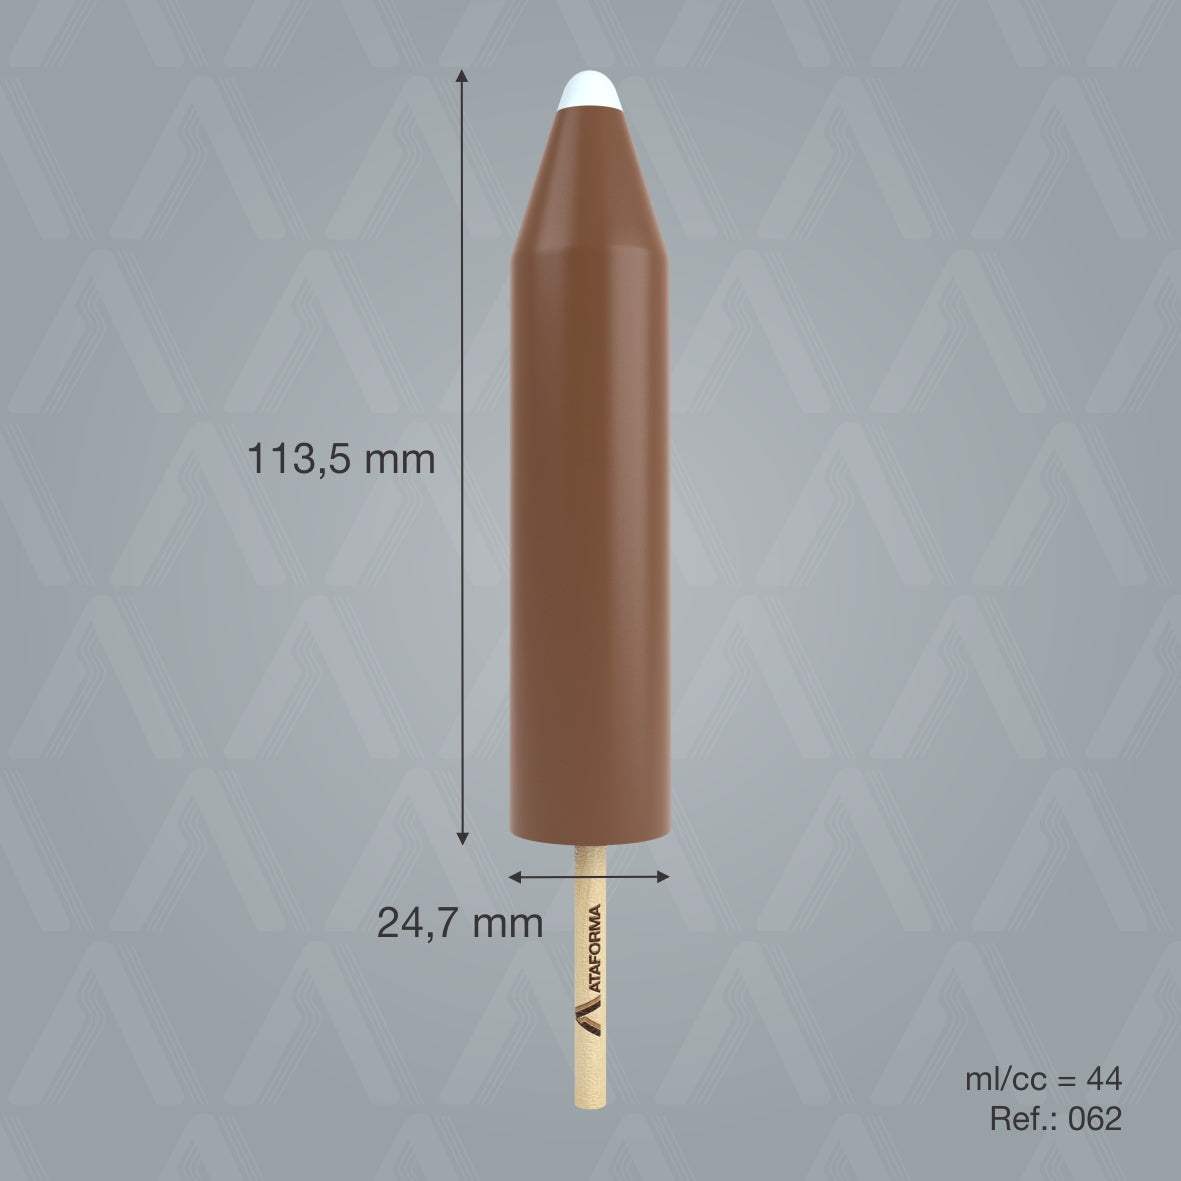 Ataforma Mold Lápis 44ml 1.5 oz 28 cavities (15+ molds pricing)